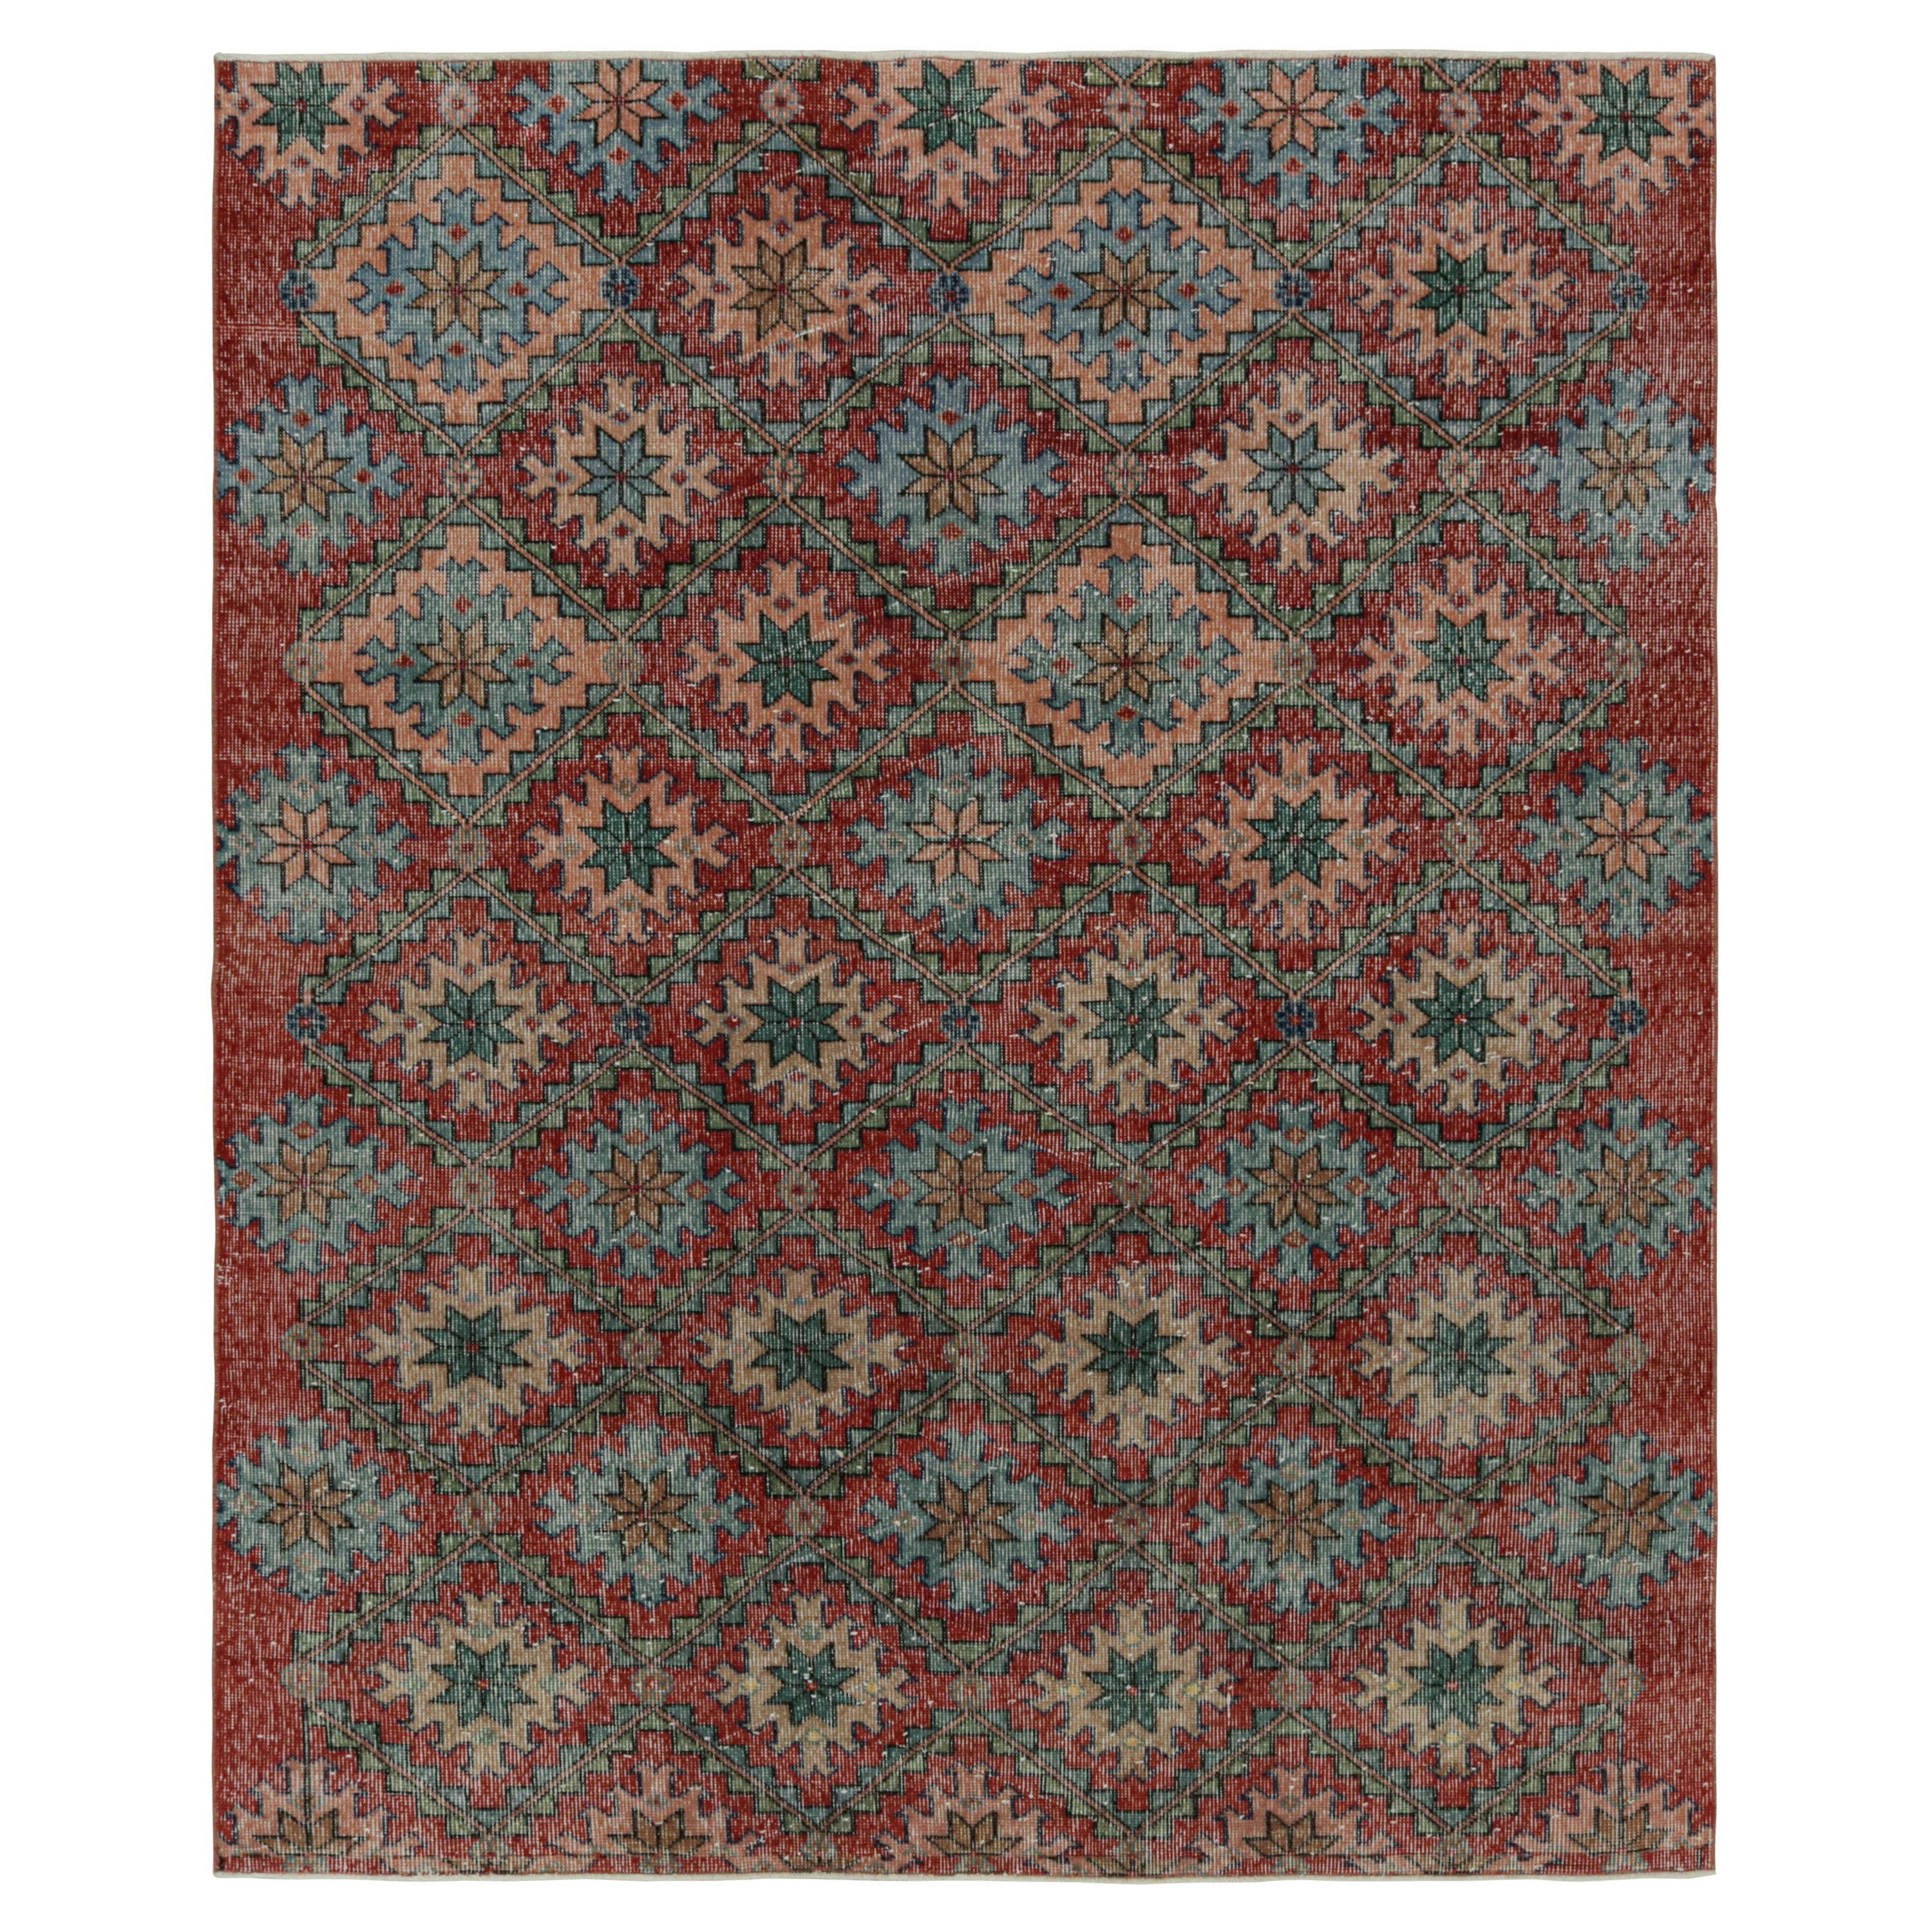 Vintage Zeki Müren Rug in Burgundy with Geometric Patterns, from Rug & Kilim  For Sale